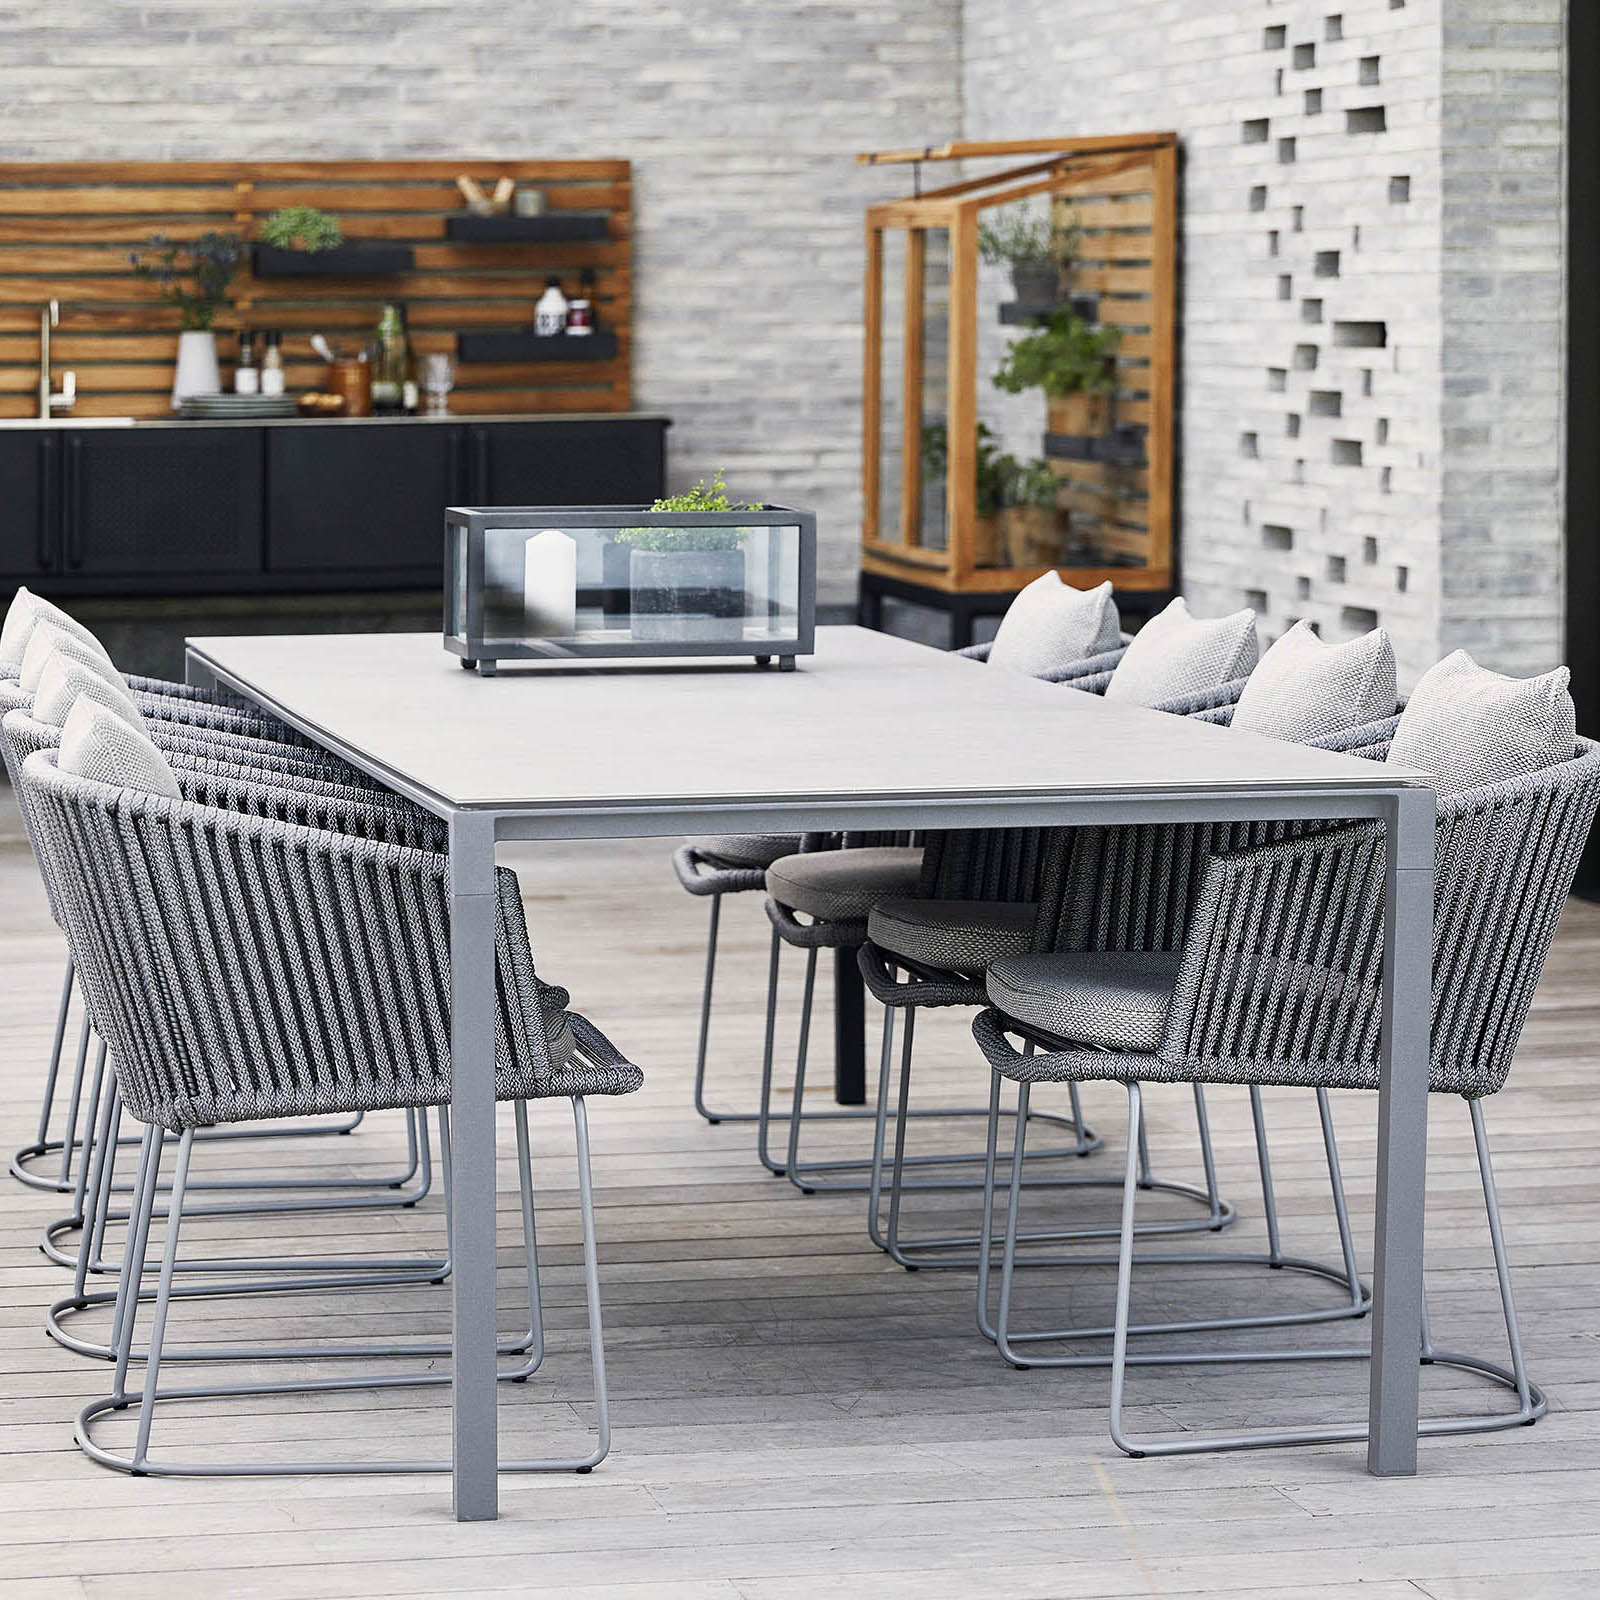 Pure Tisch 280x100 cm aus Aluminium in Light Grey mit Tischplatte aus Ceramic in Concrete Grey